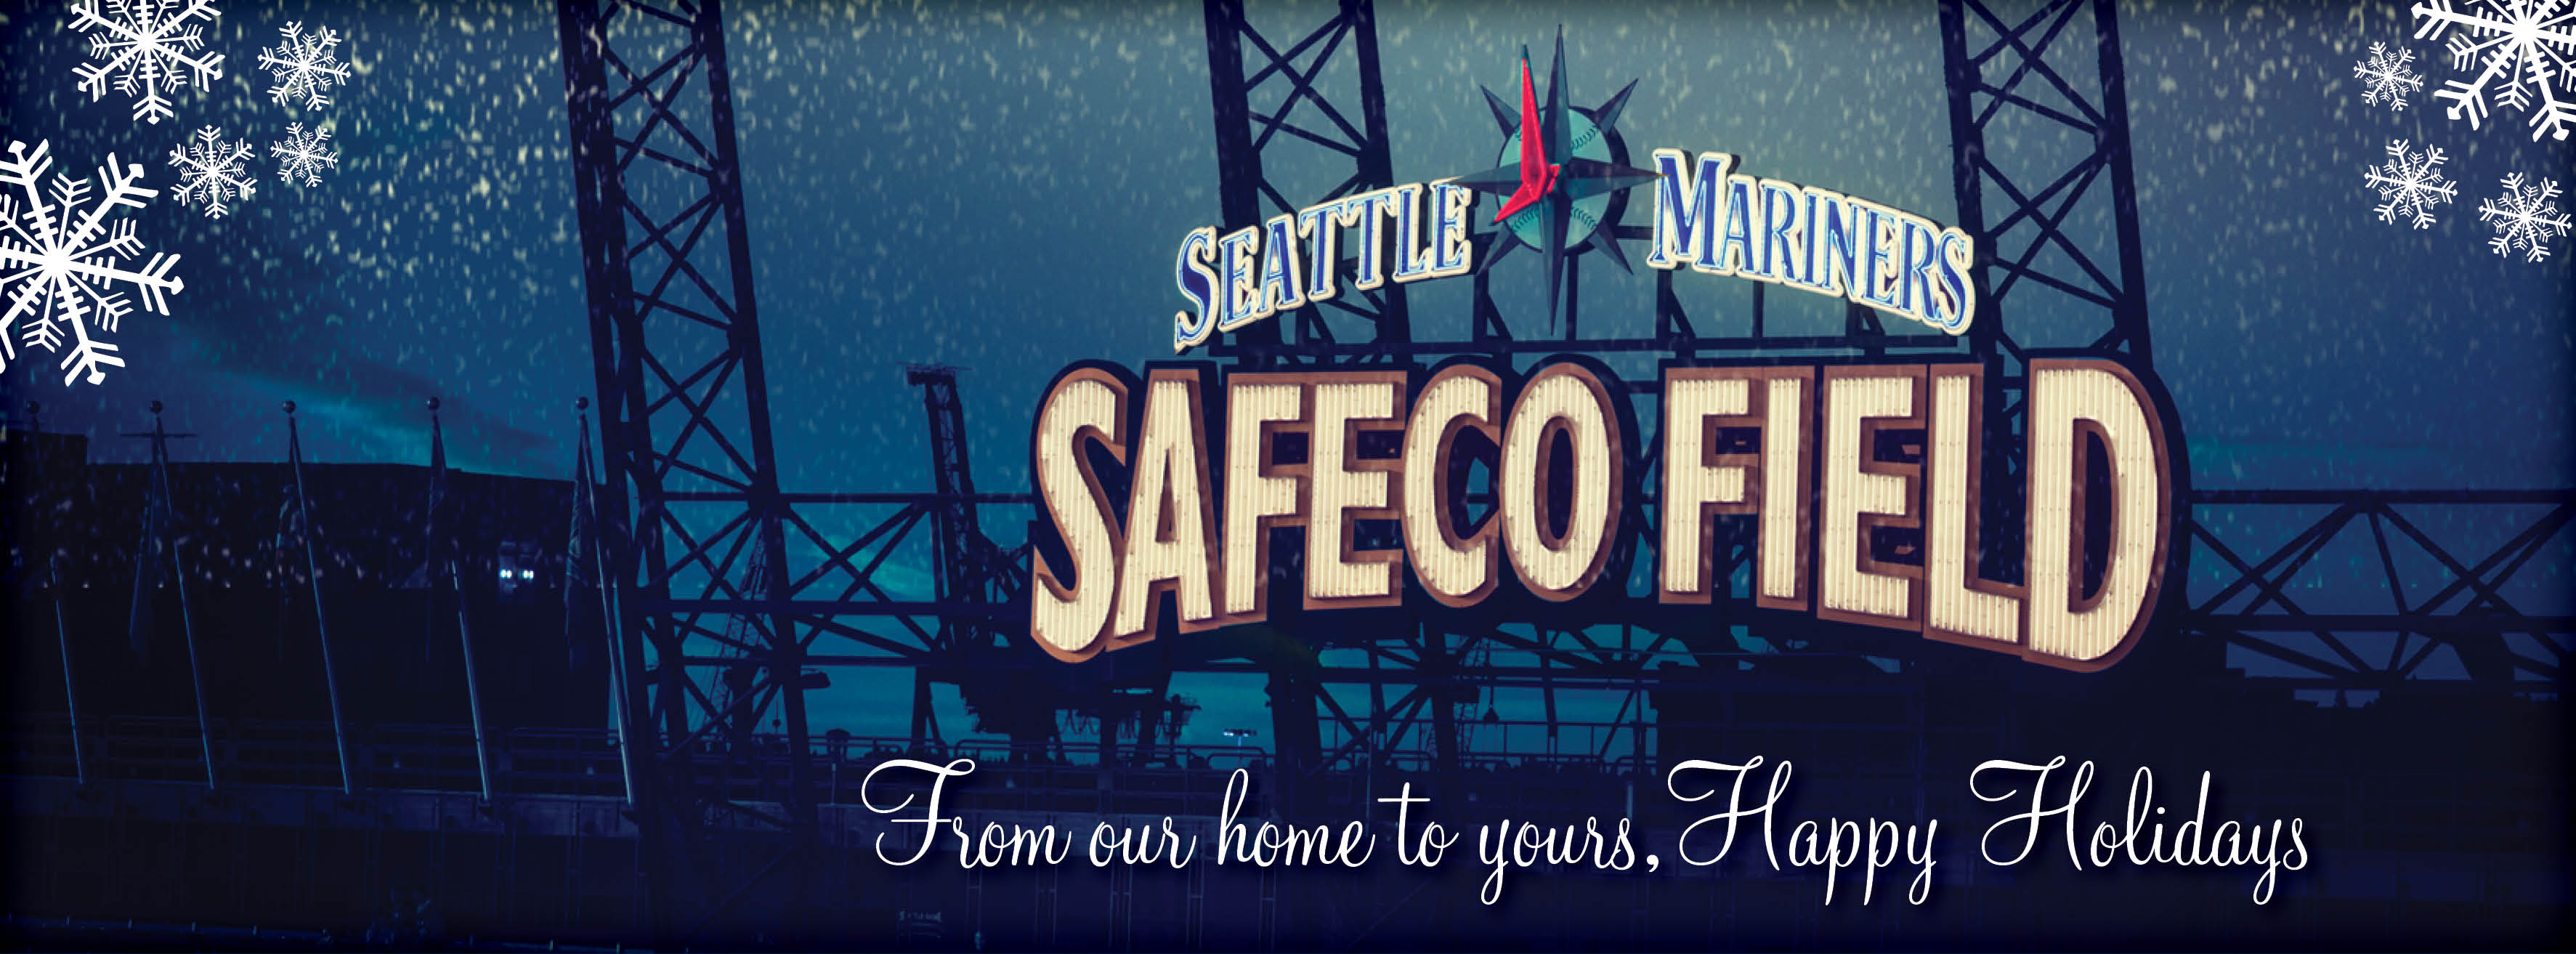 Seattle Mariners Safeco Stadium Baseball Mlb Wallpaper Background